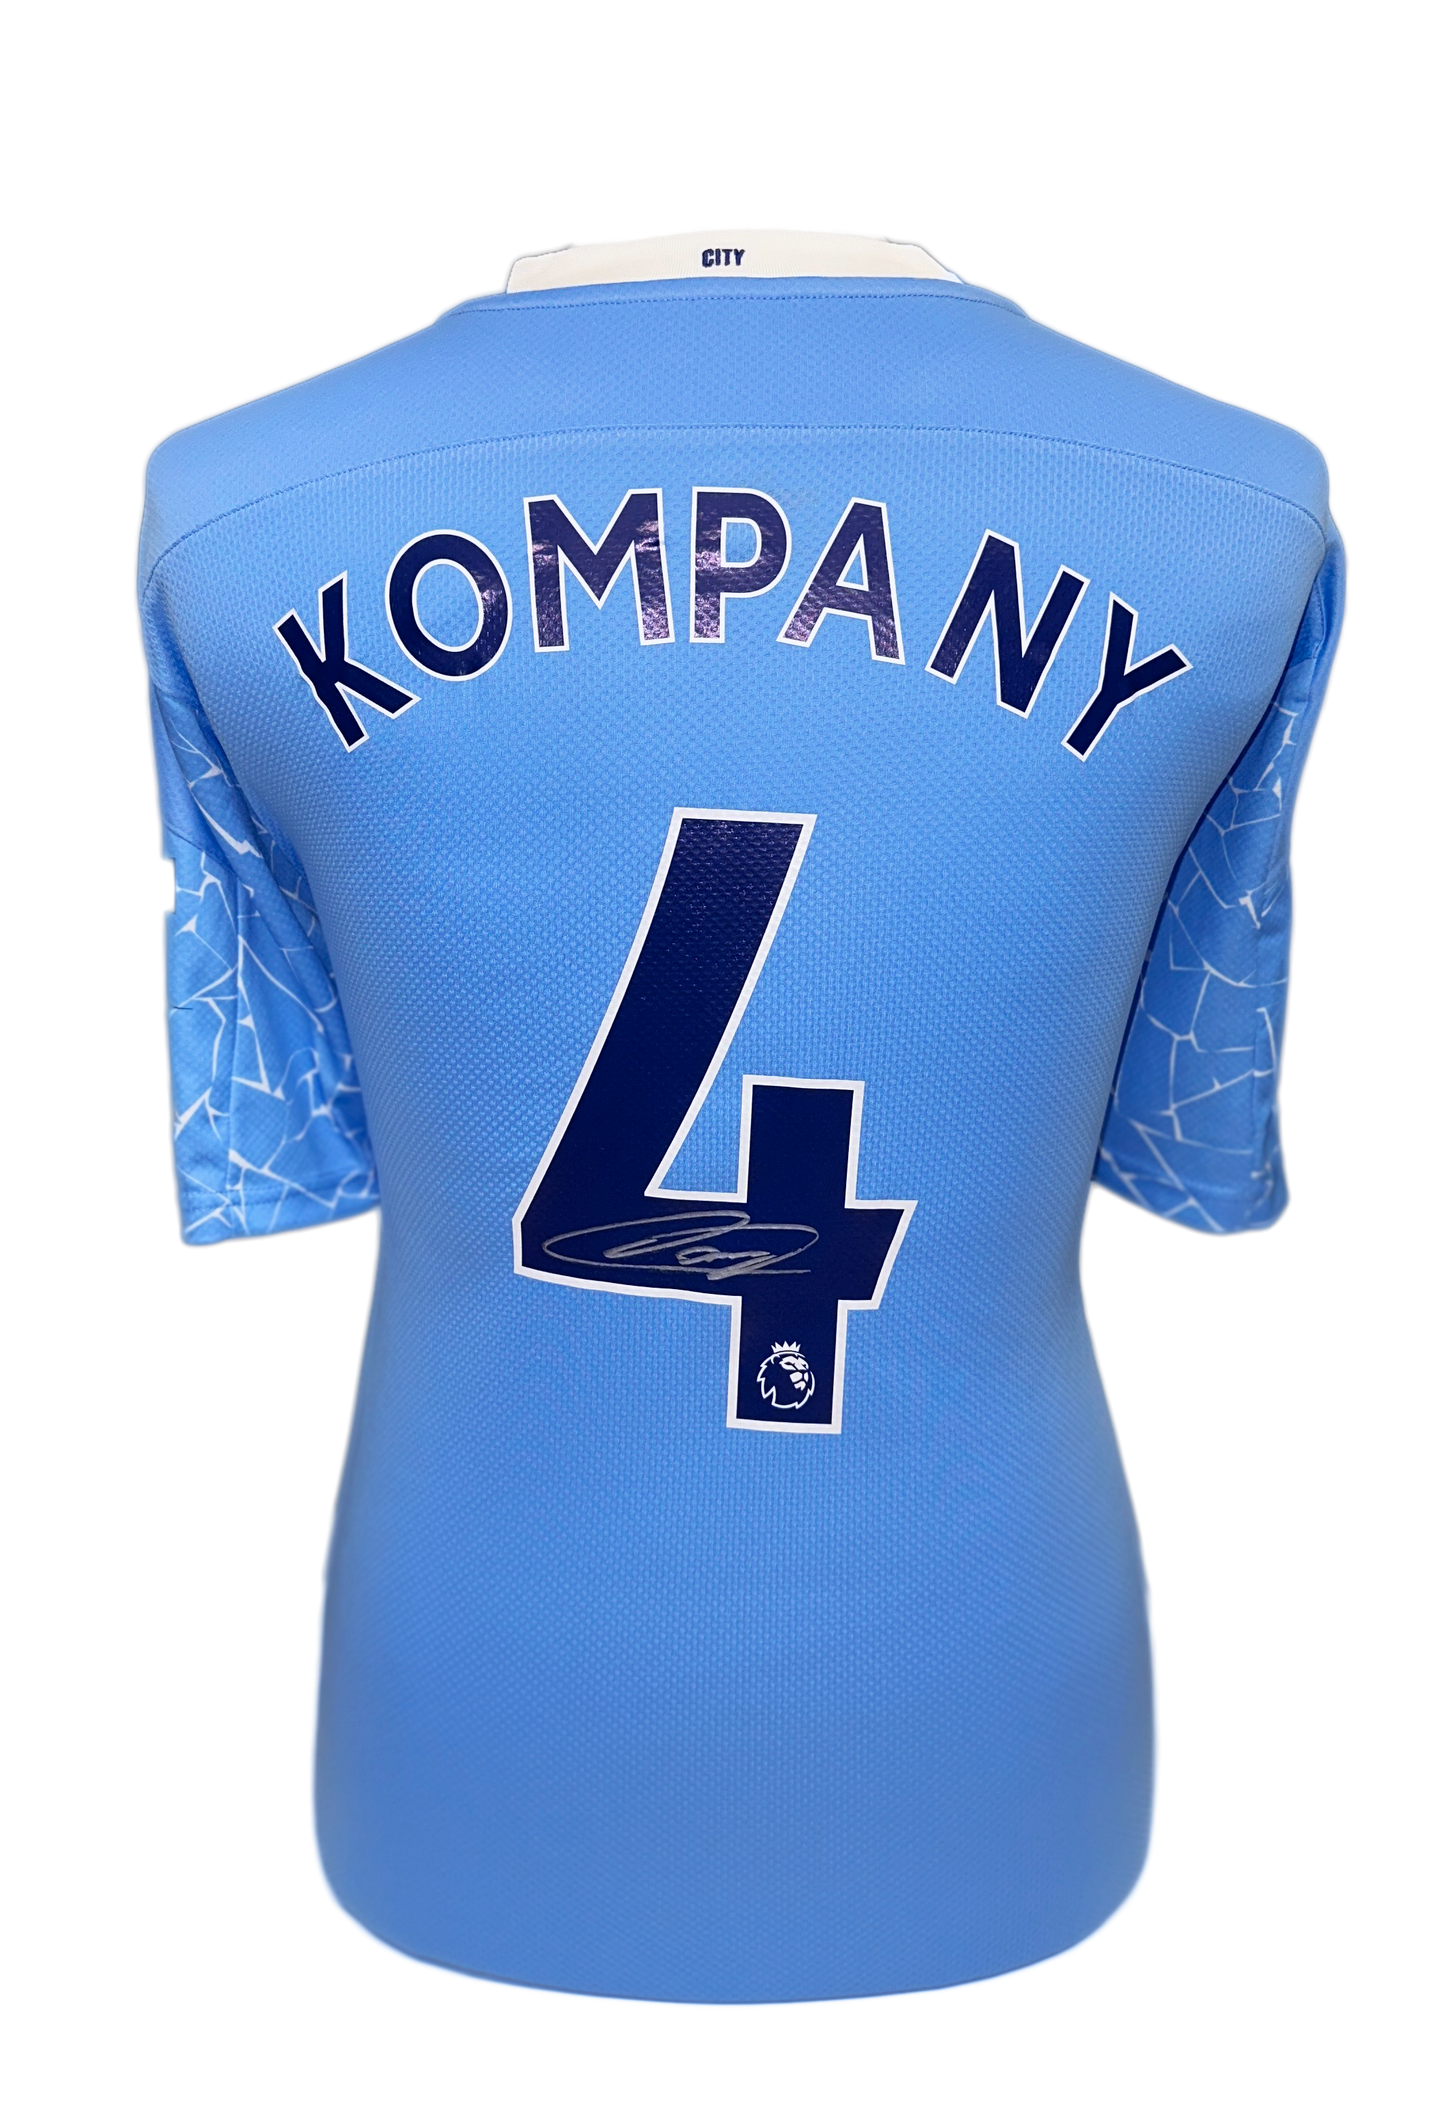 Vincent Kompany signed 20/21 Manchester City shirt